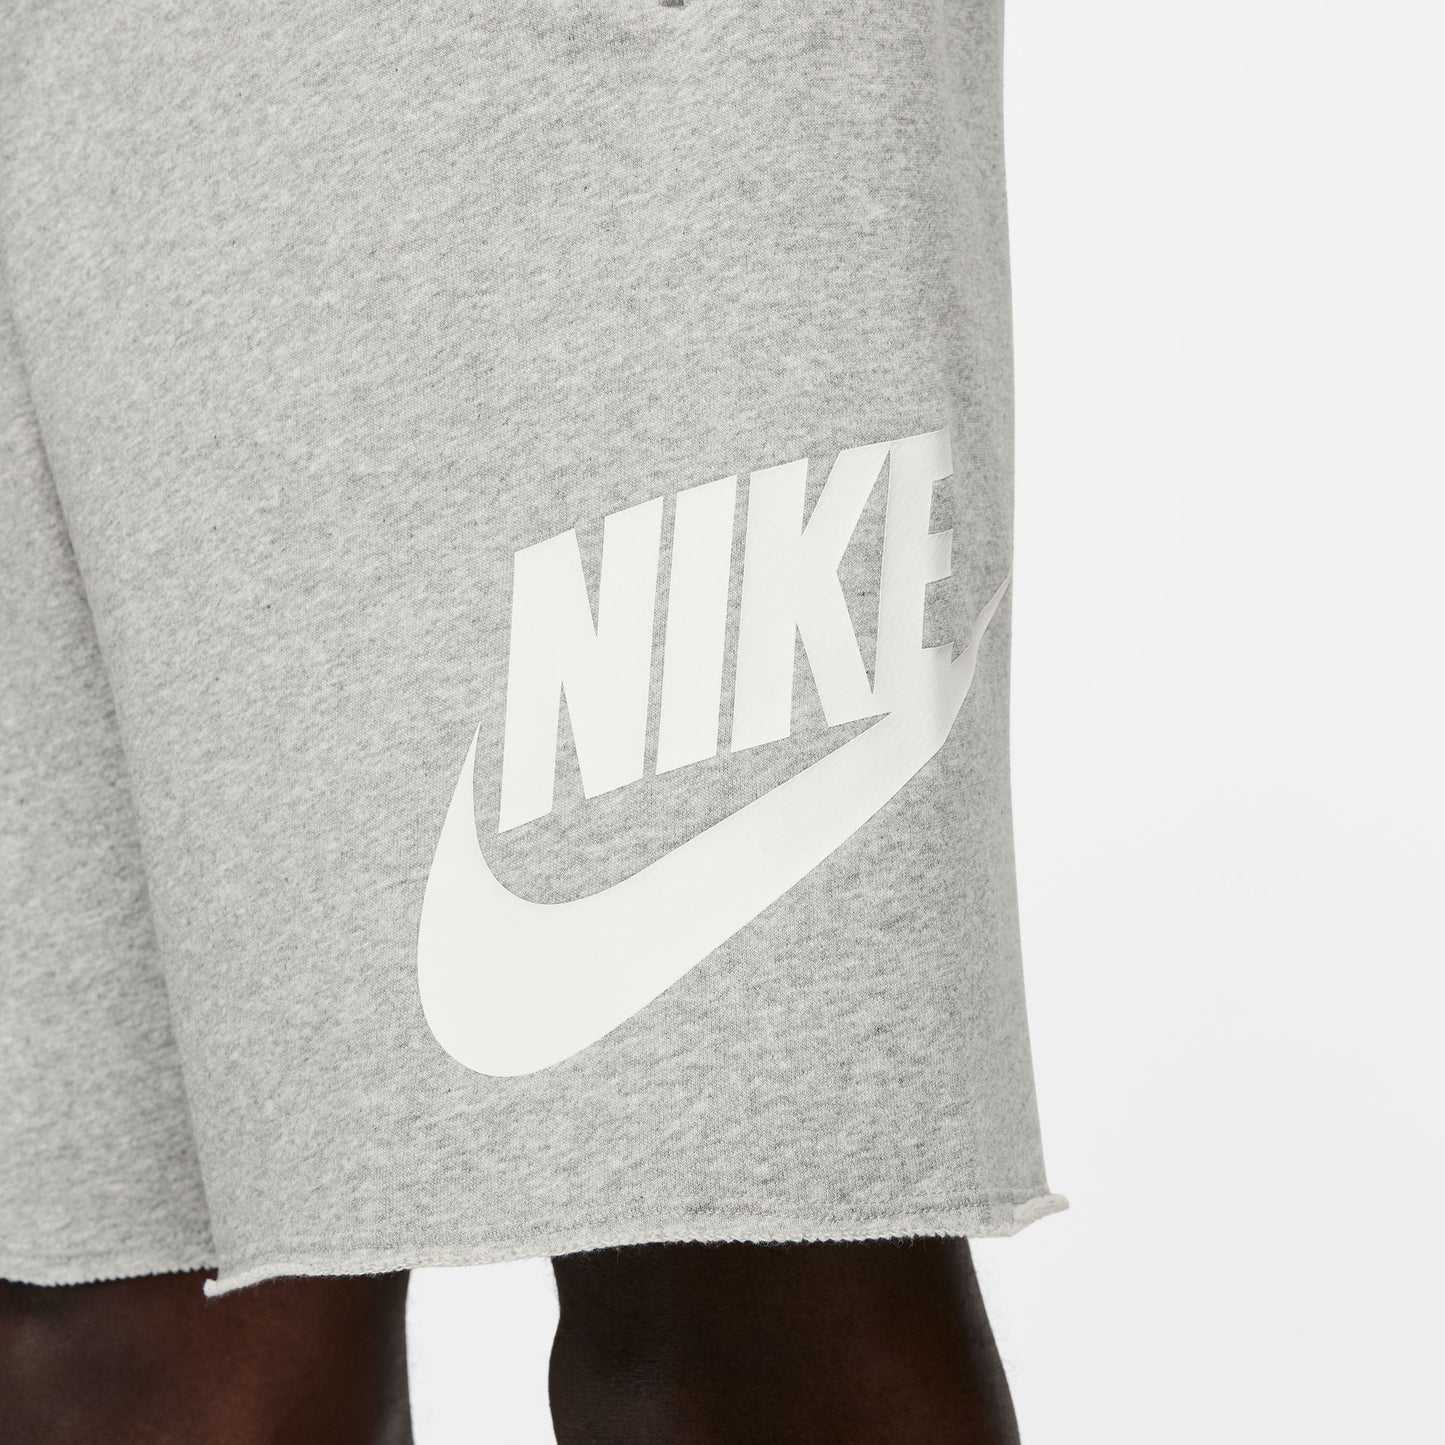 Nike Alumni Shorts